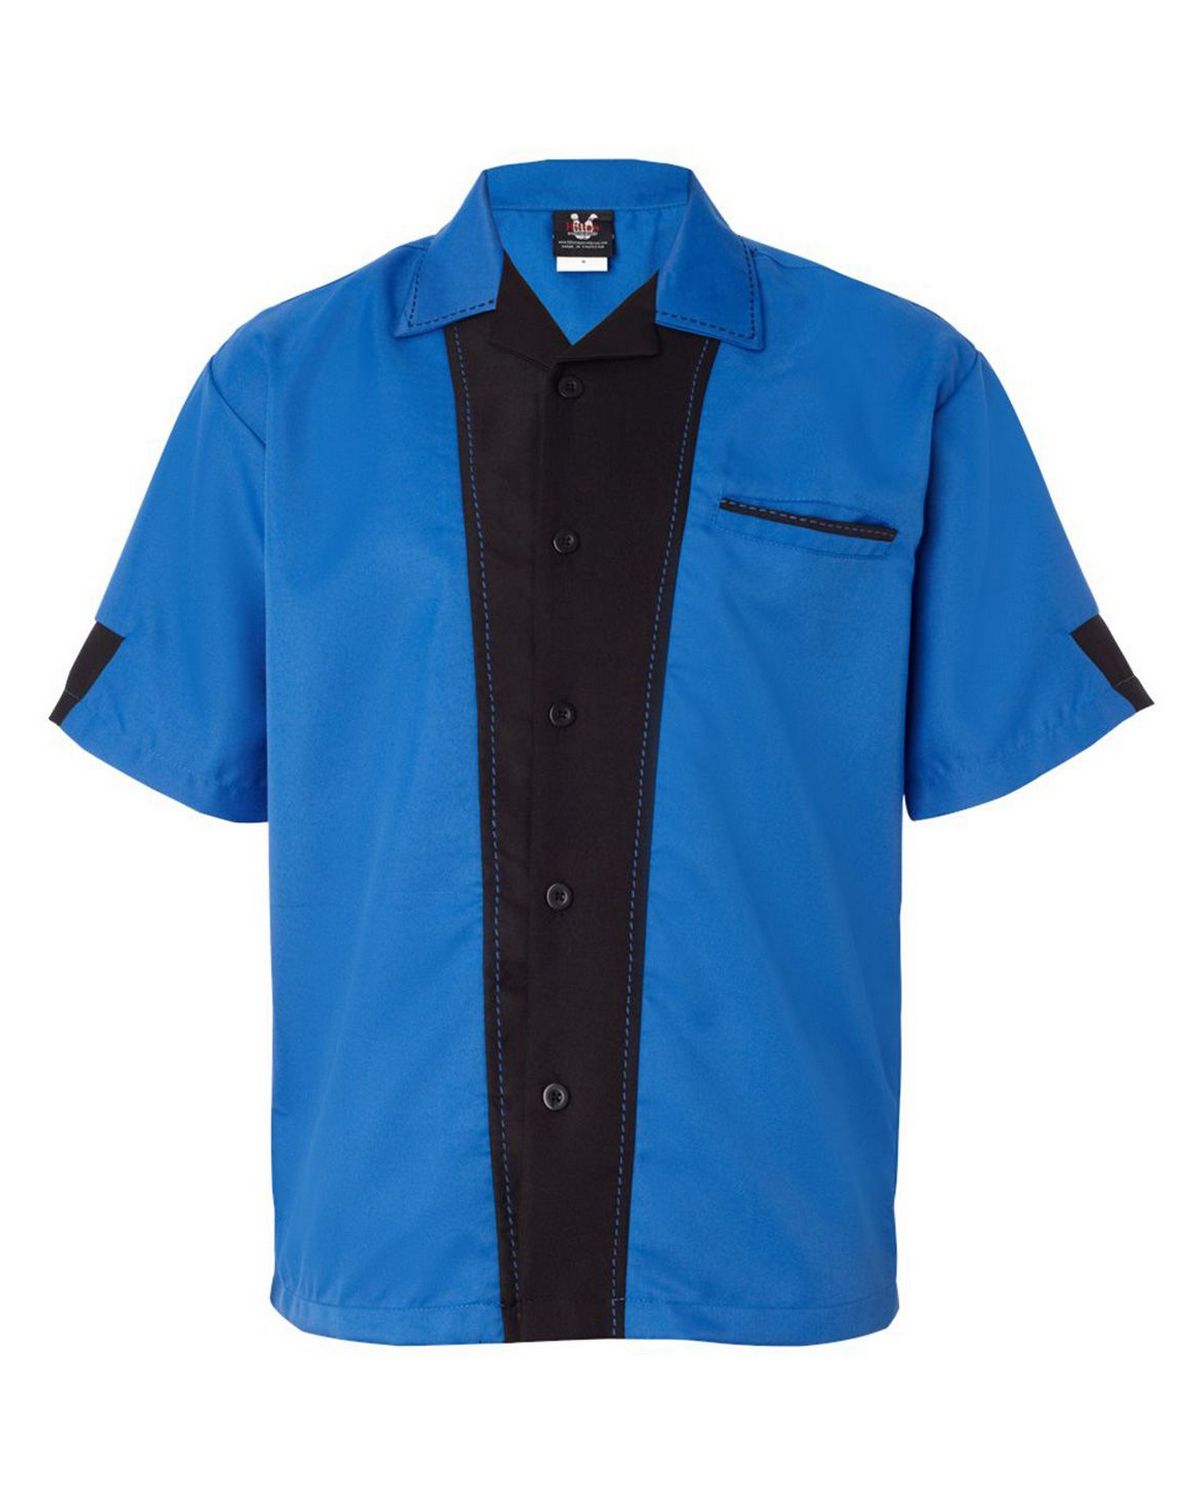 Hilton HP2245 Monterey Bowling Shirt - Free Shipping Available